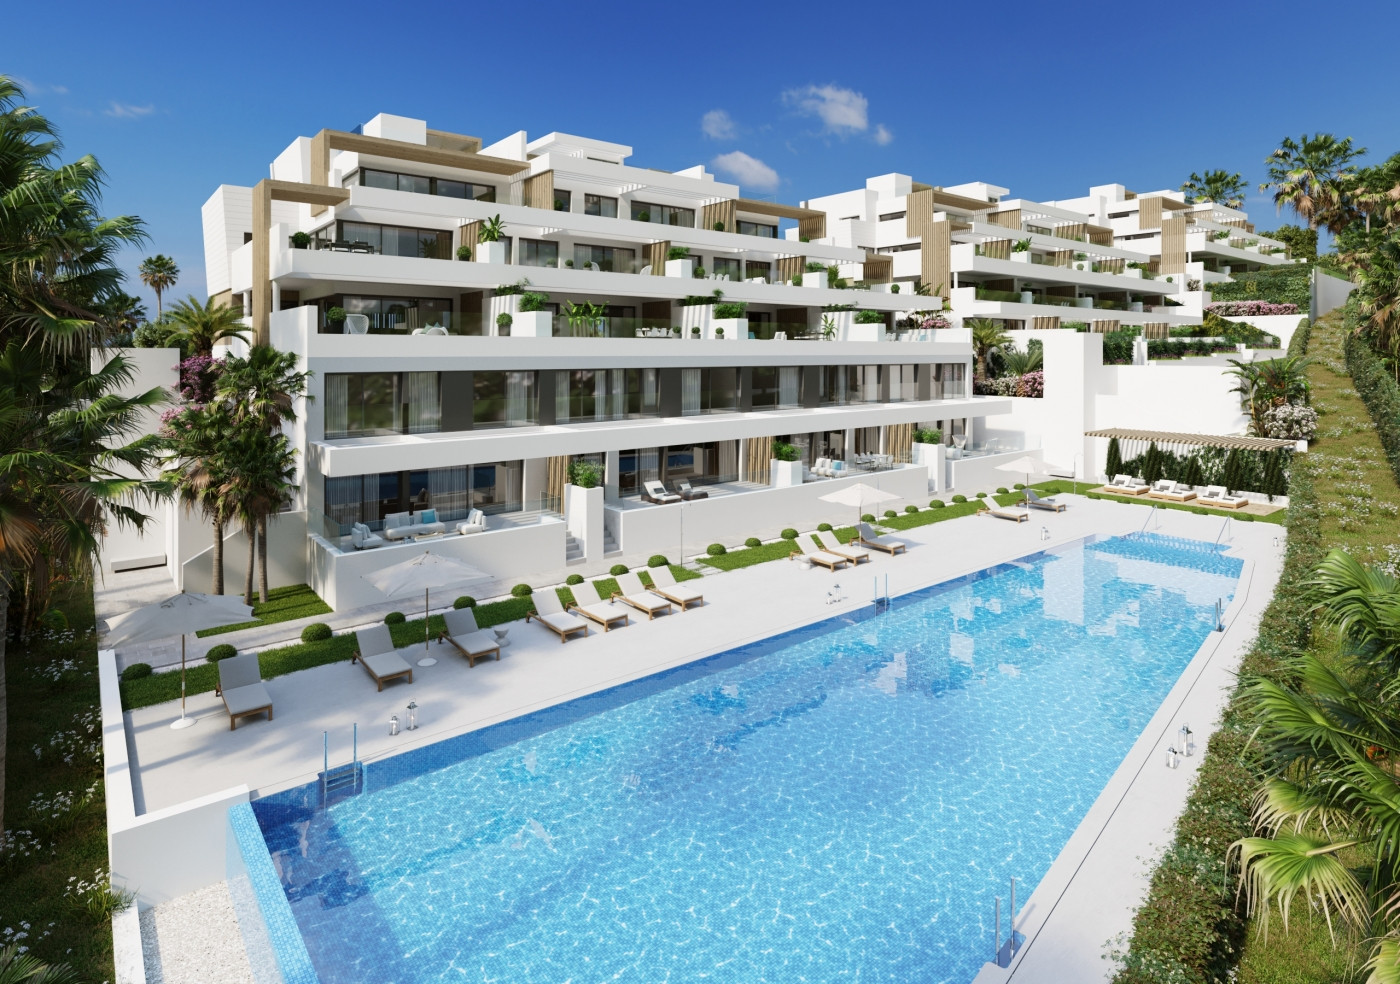 Luxury two bedroom duplex penthouse with ocean views in Estepona. | Image 1